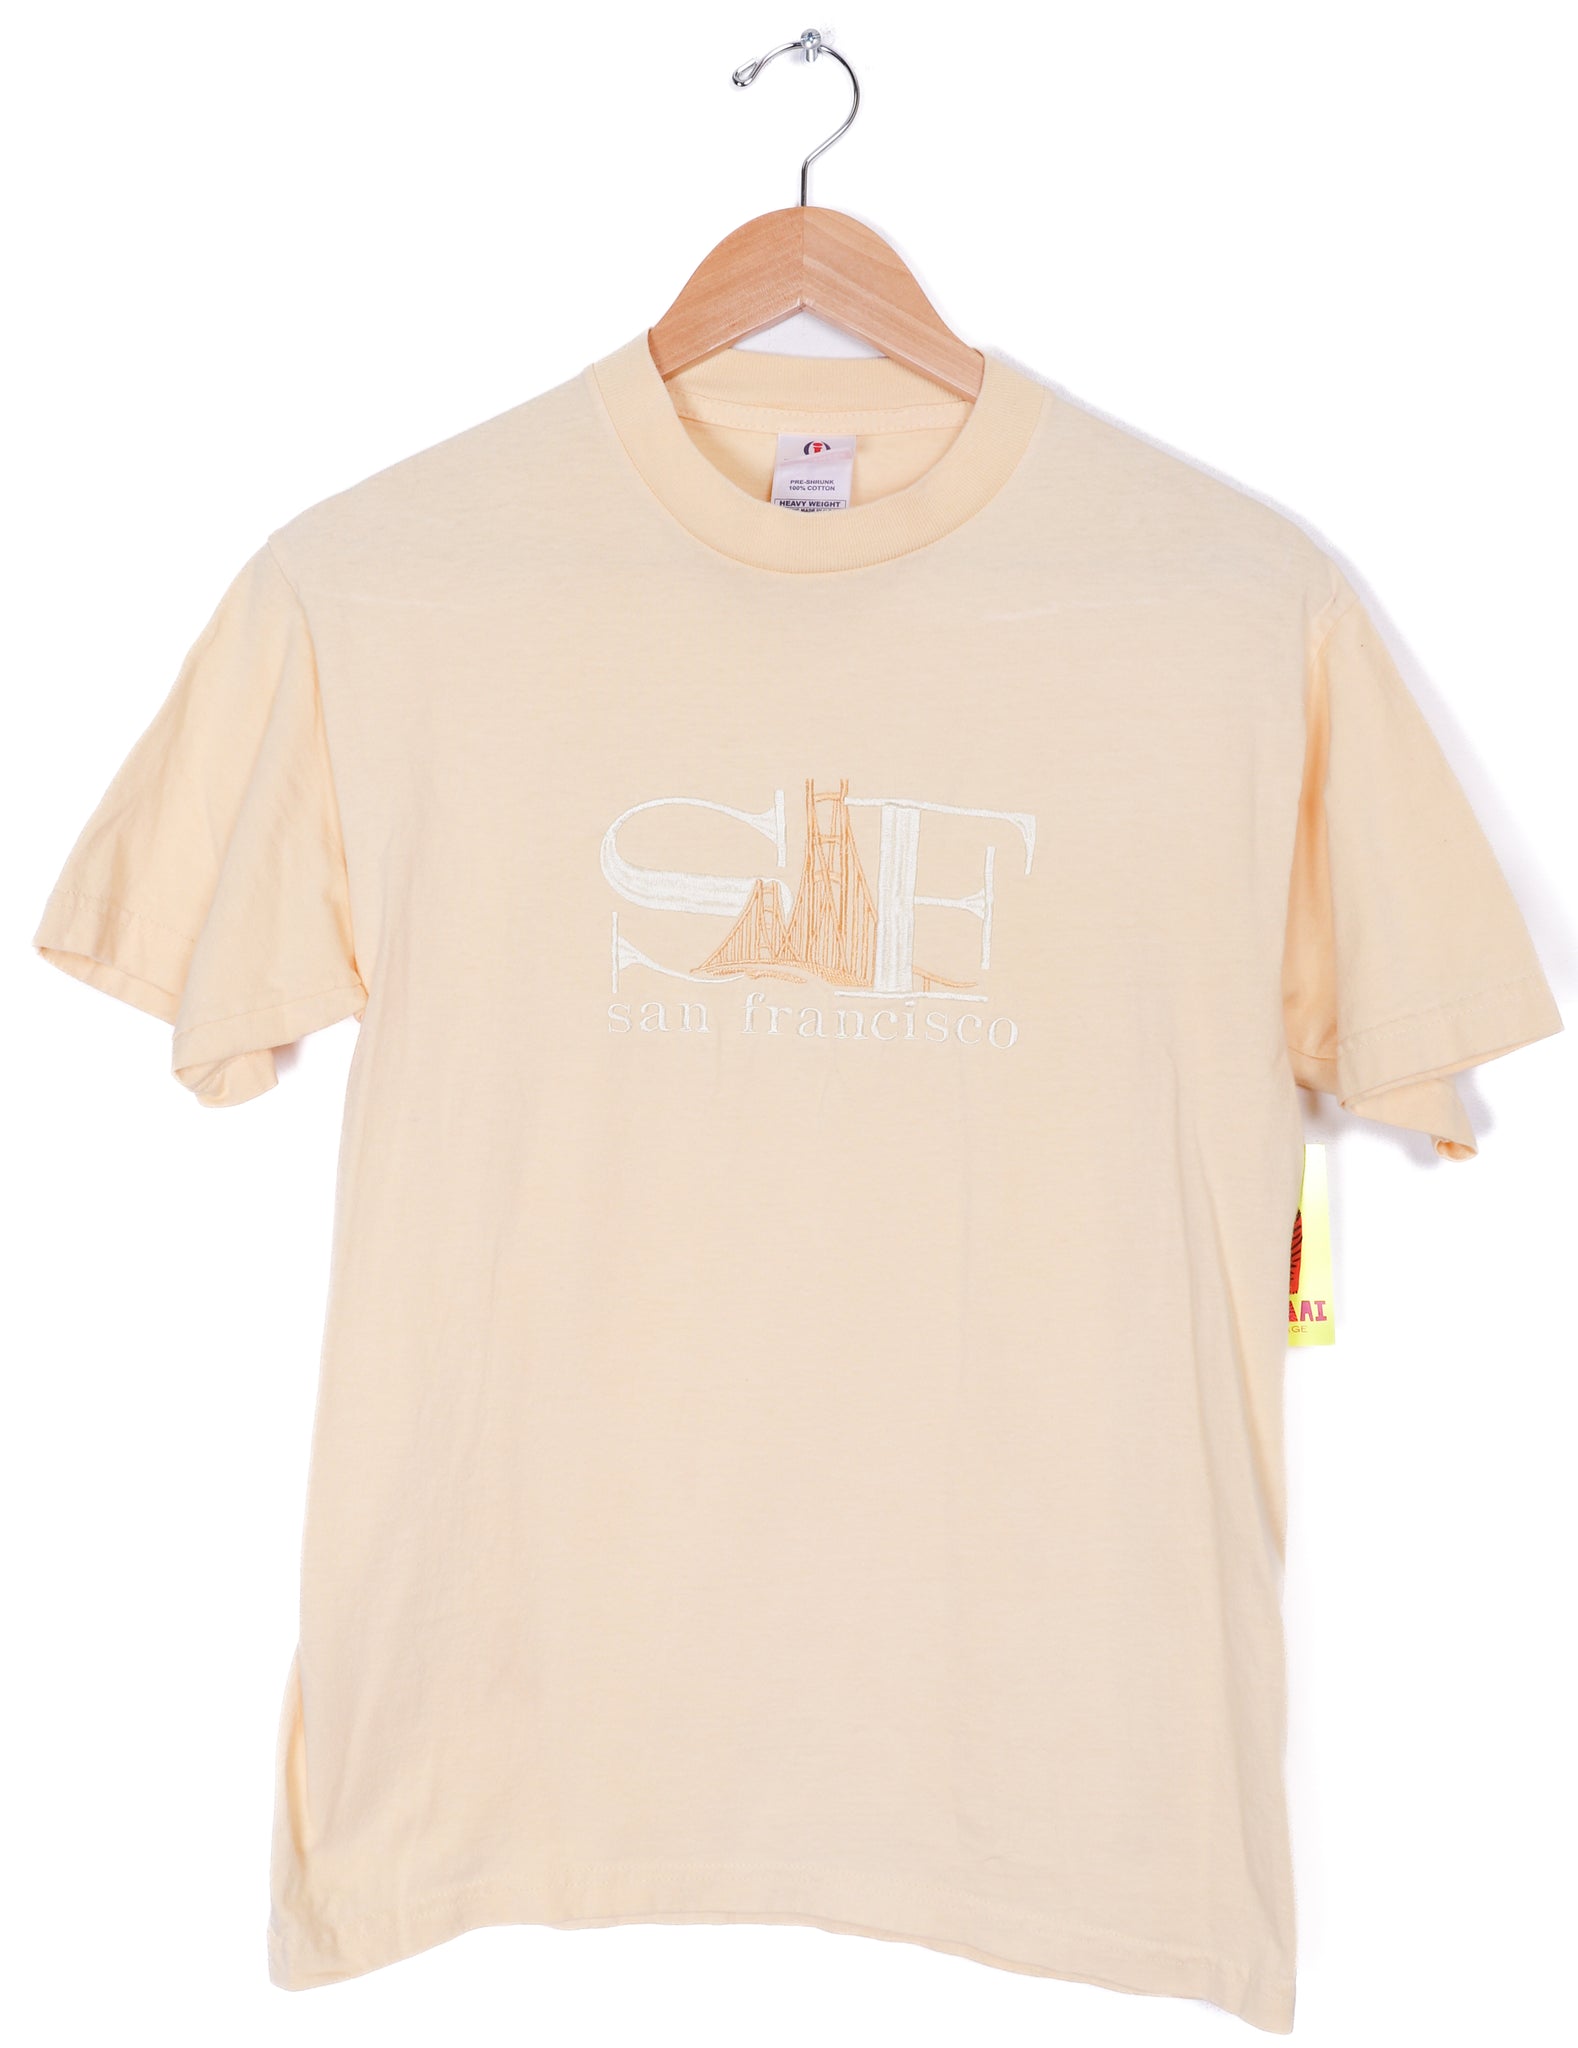 90s San Francisco Yellow T-Shirt